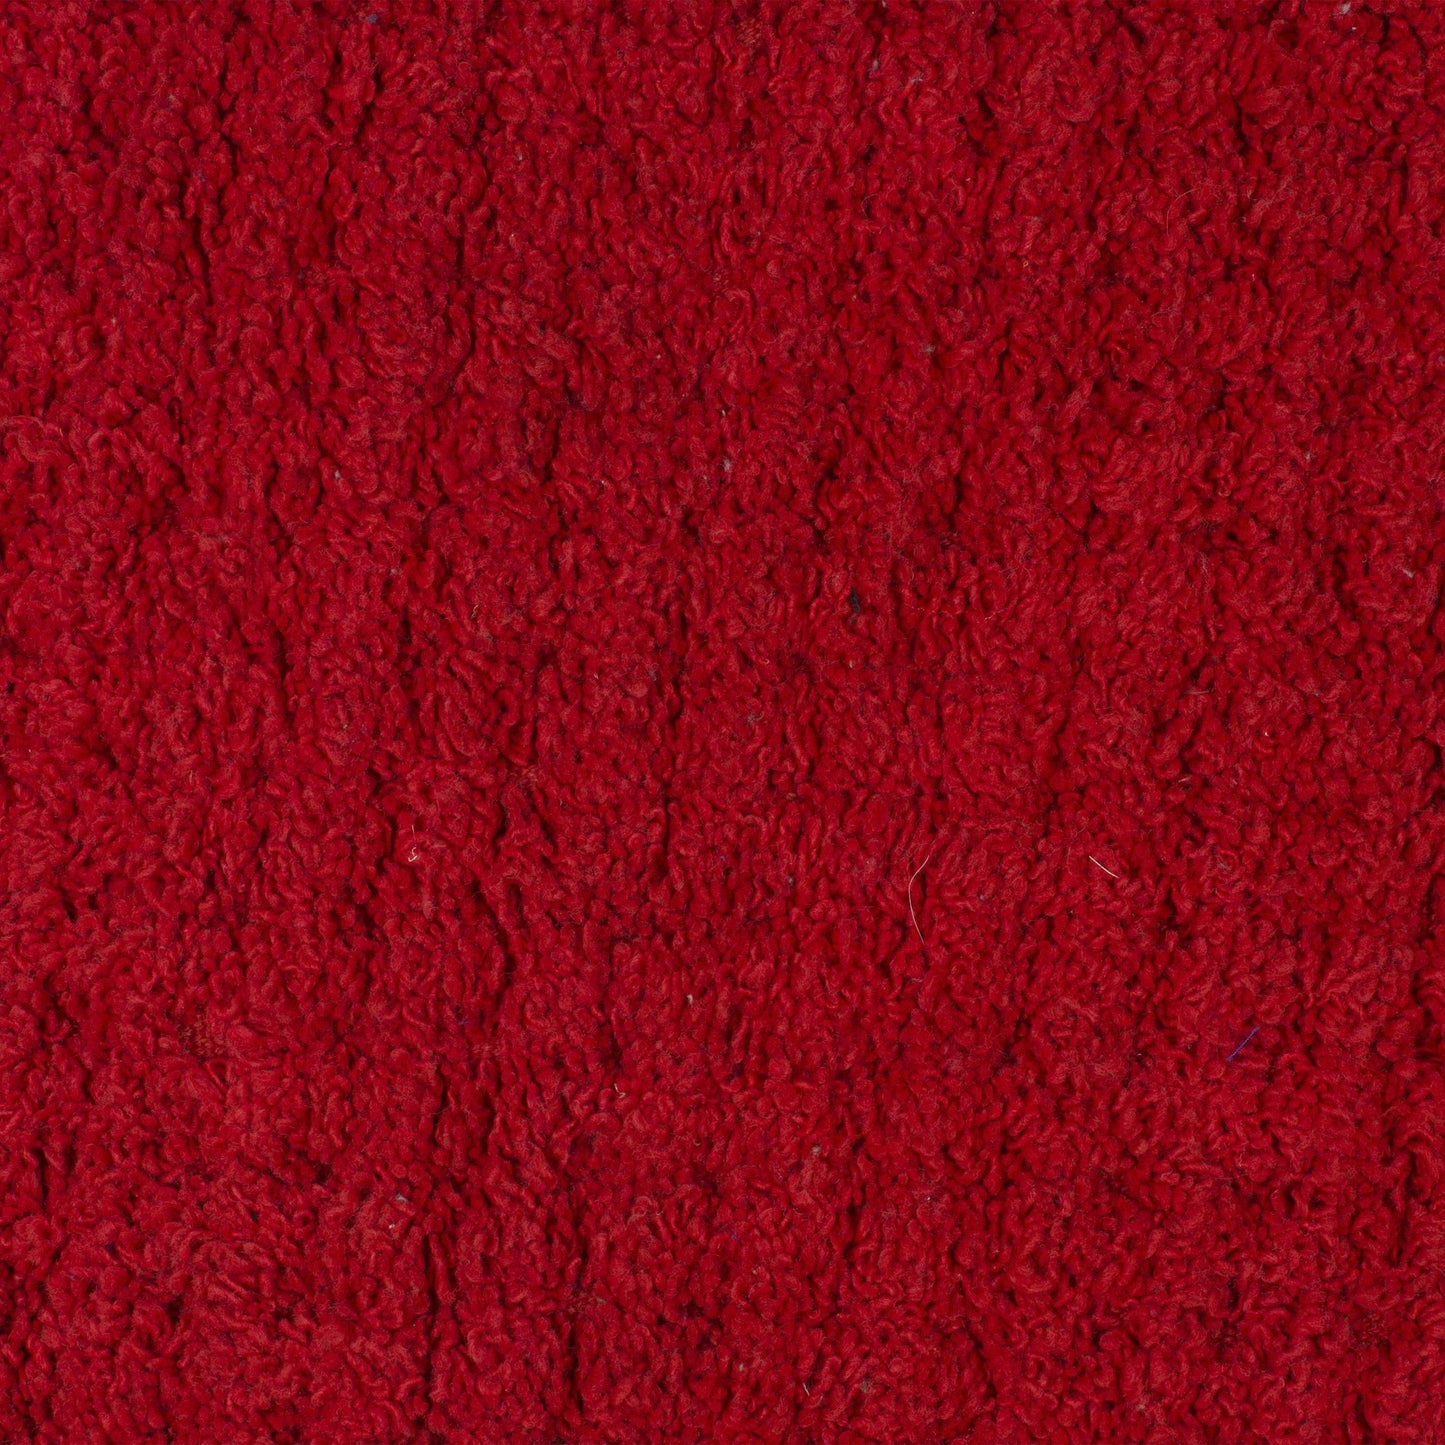 SWHF Premium Cotton Oval Anti Skid Bath Mat: Red - SWHF